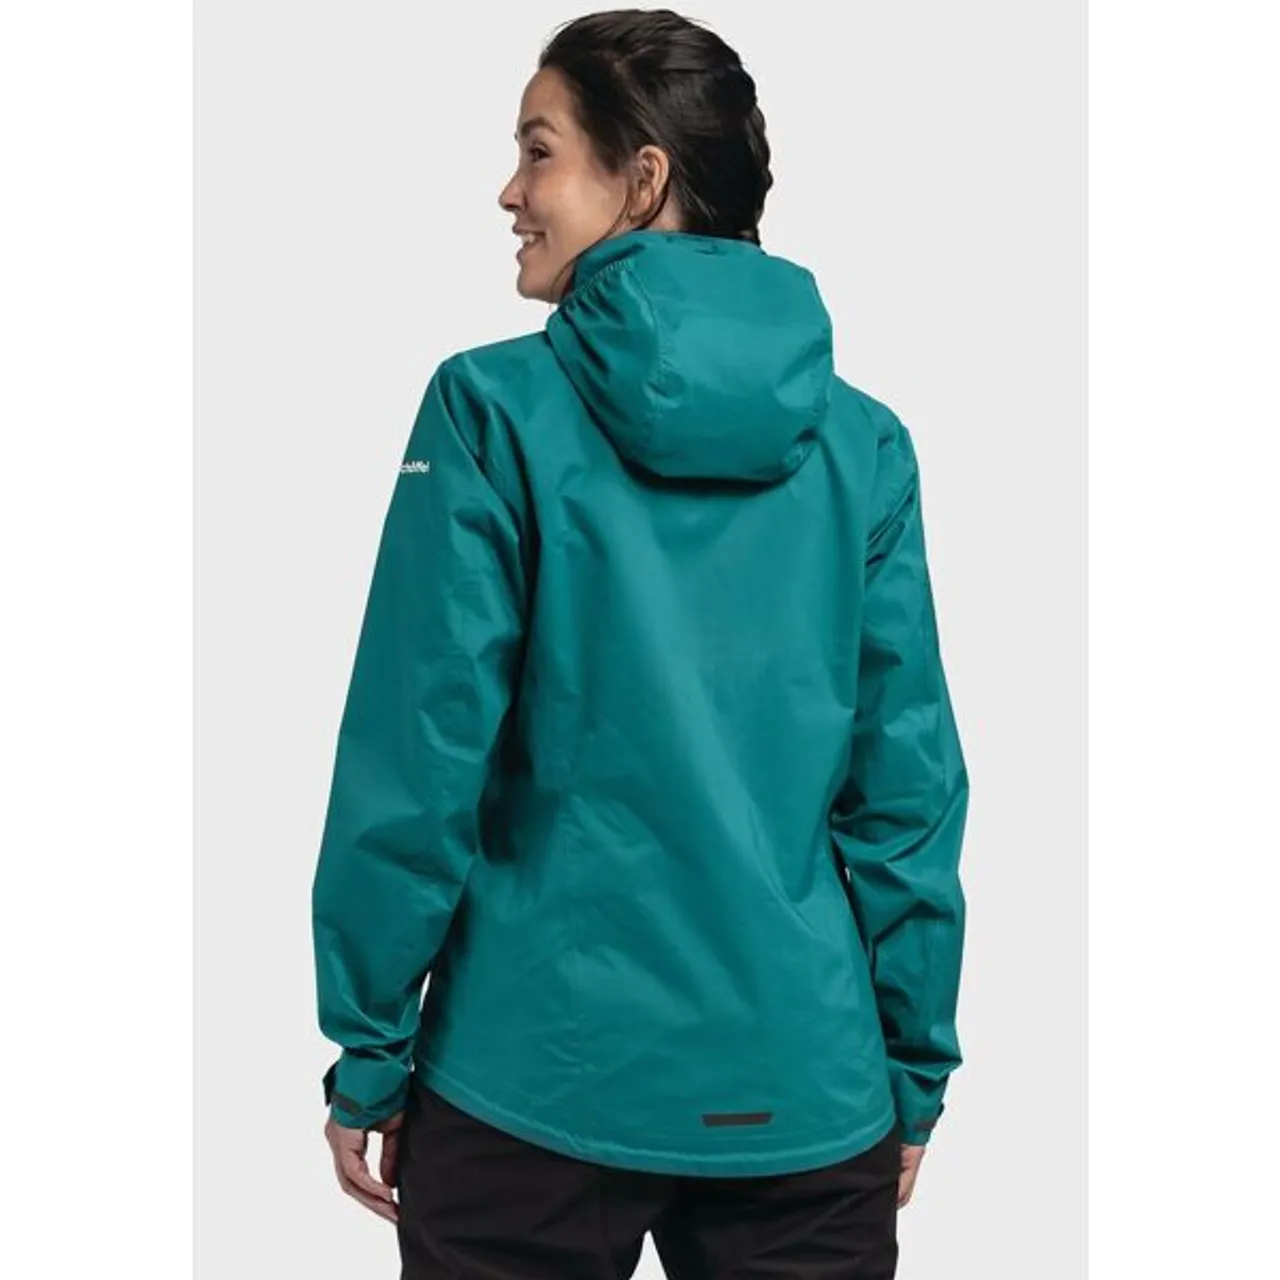 Regenjacke SCHÖFFEL "2.5L Jacket Tarvis L" Gr. 38, grün (6895, grün) Damen Jacken